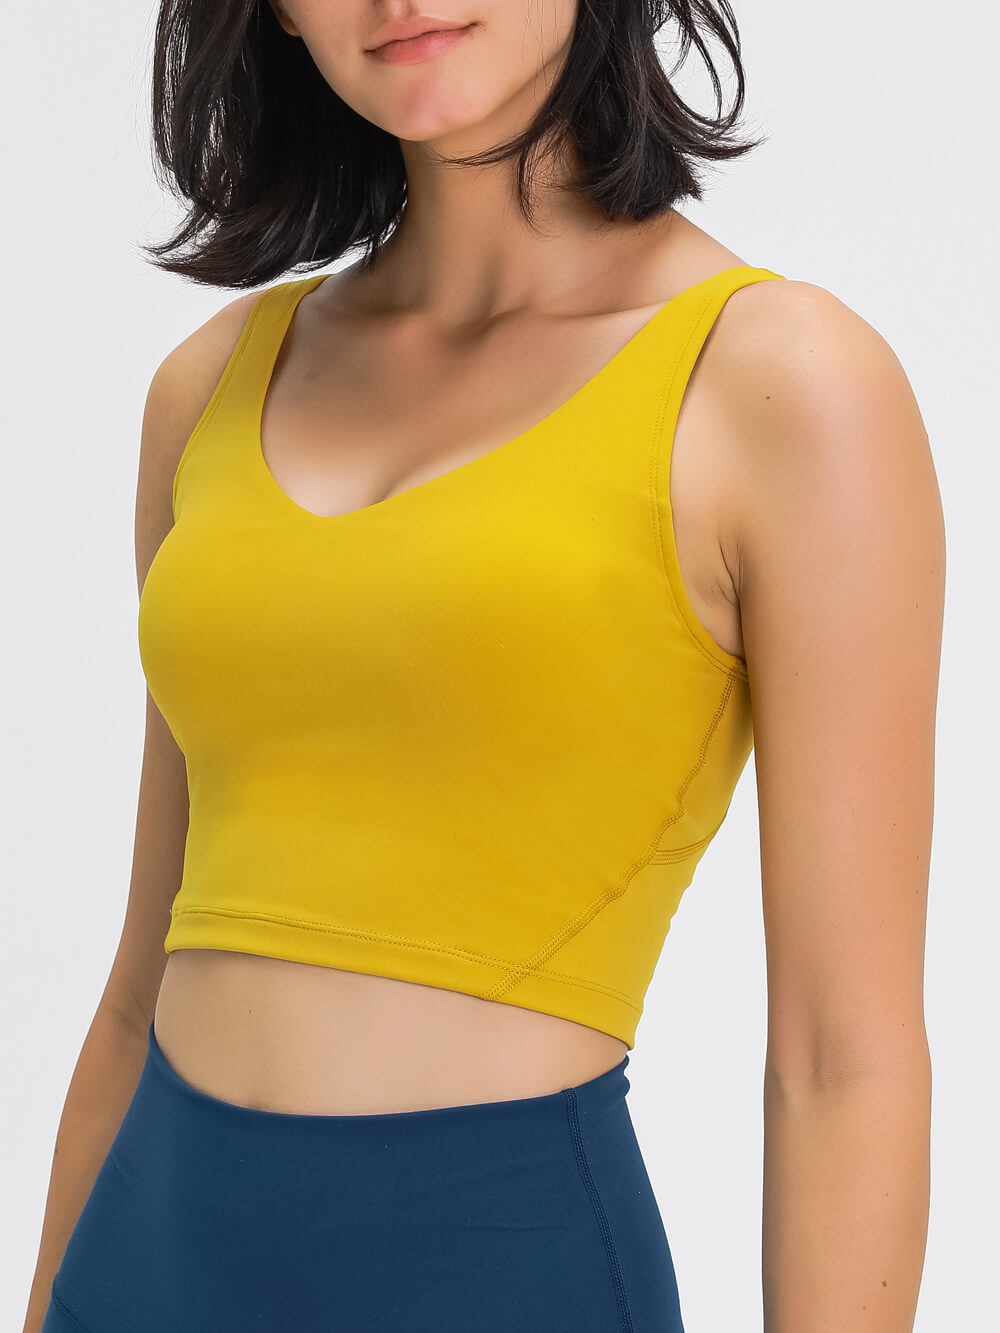 Buy CtopoGo Women's Sports Bra Sunny Yellow Half Sleeve Tank Top